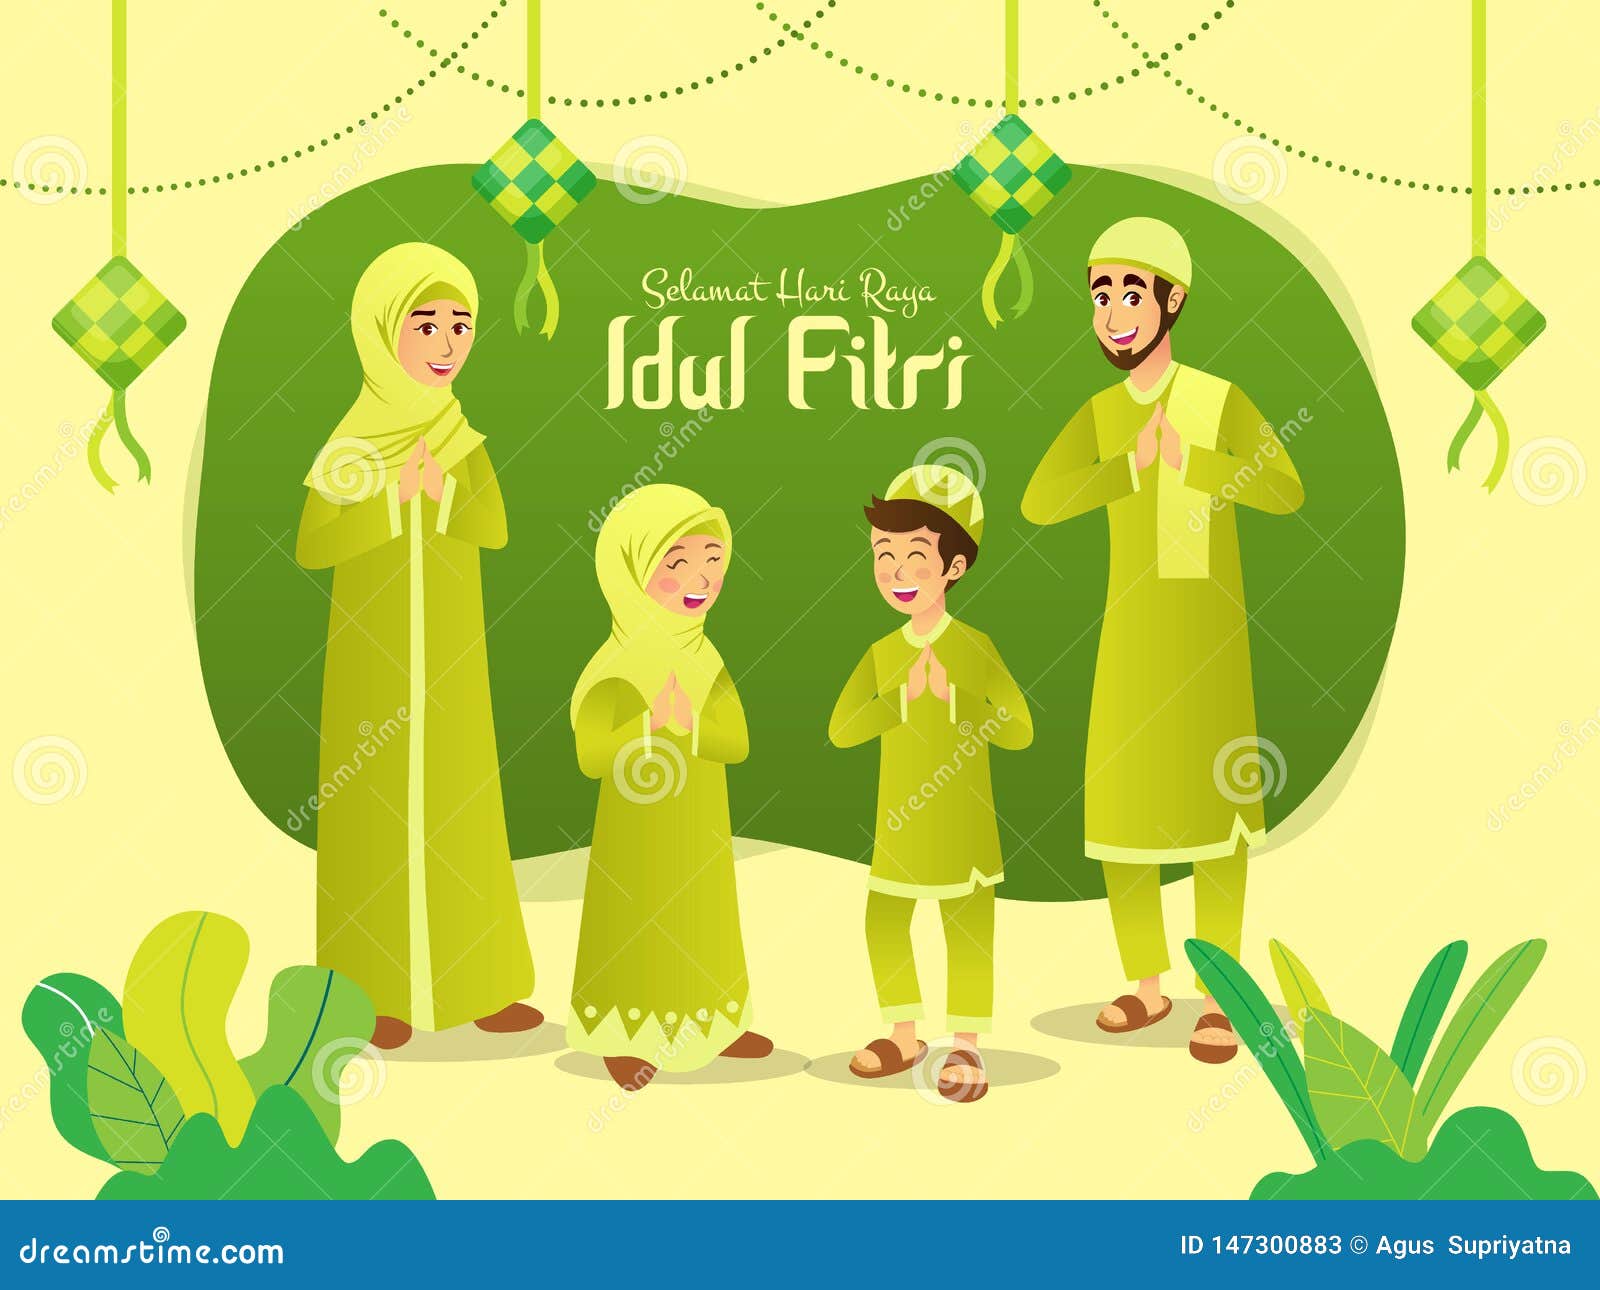 Selamat Hari Raya Idul Fitri is Another Language of Happy Eid Mubarak in  Indonesian. Cartoon Muslim Family Celebrating Eid Al Fitr Stock Vector -  Illustration of character, islamic: 147300883